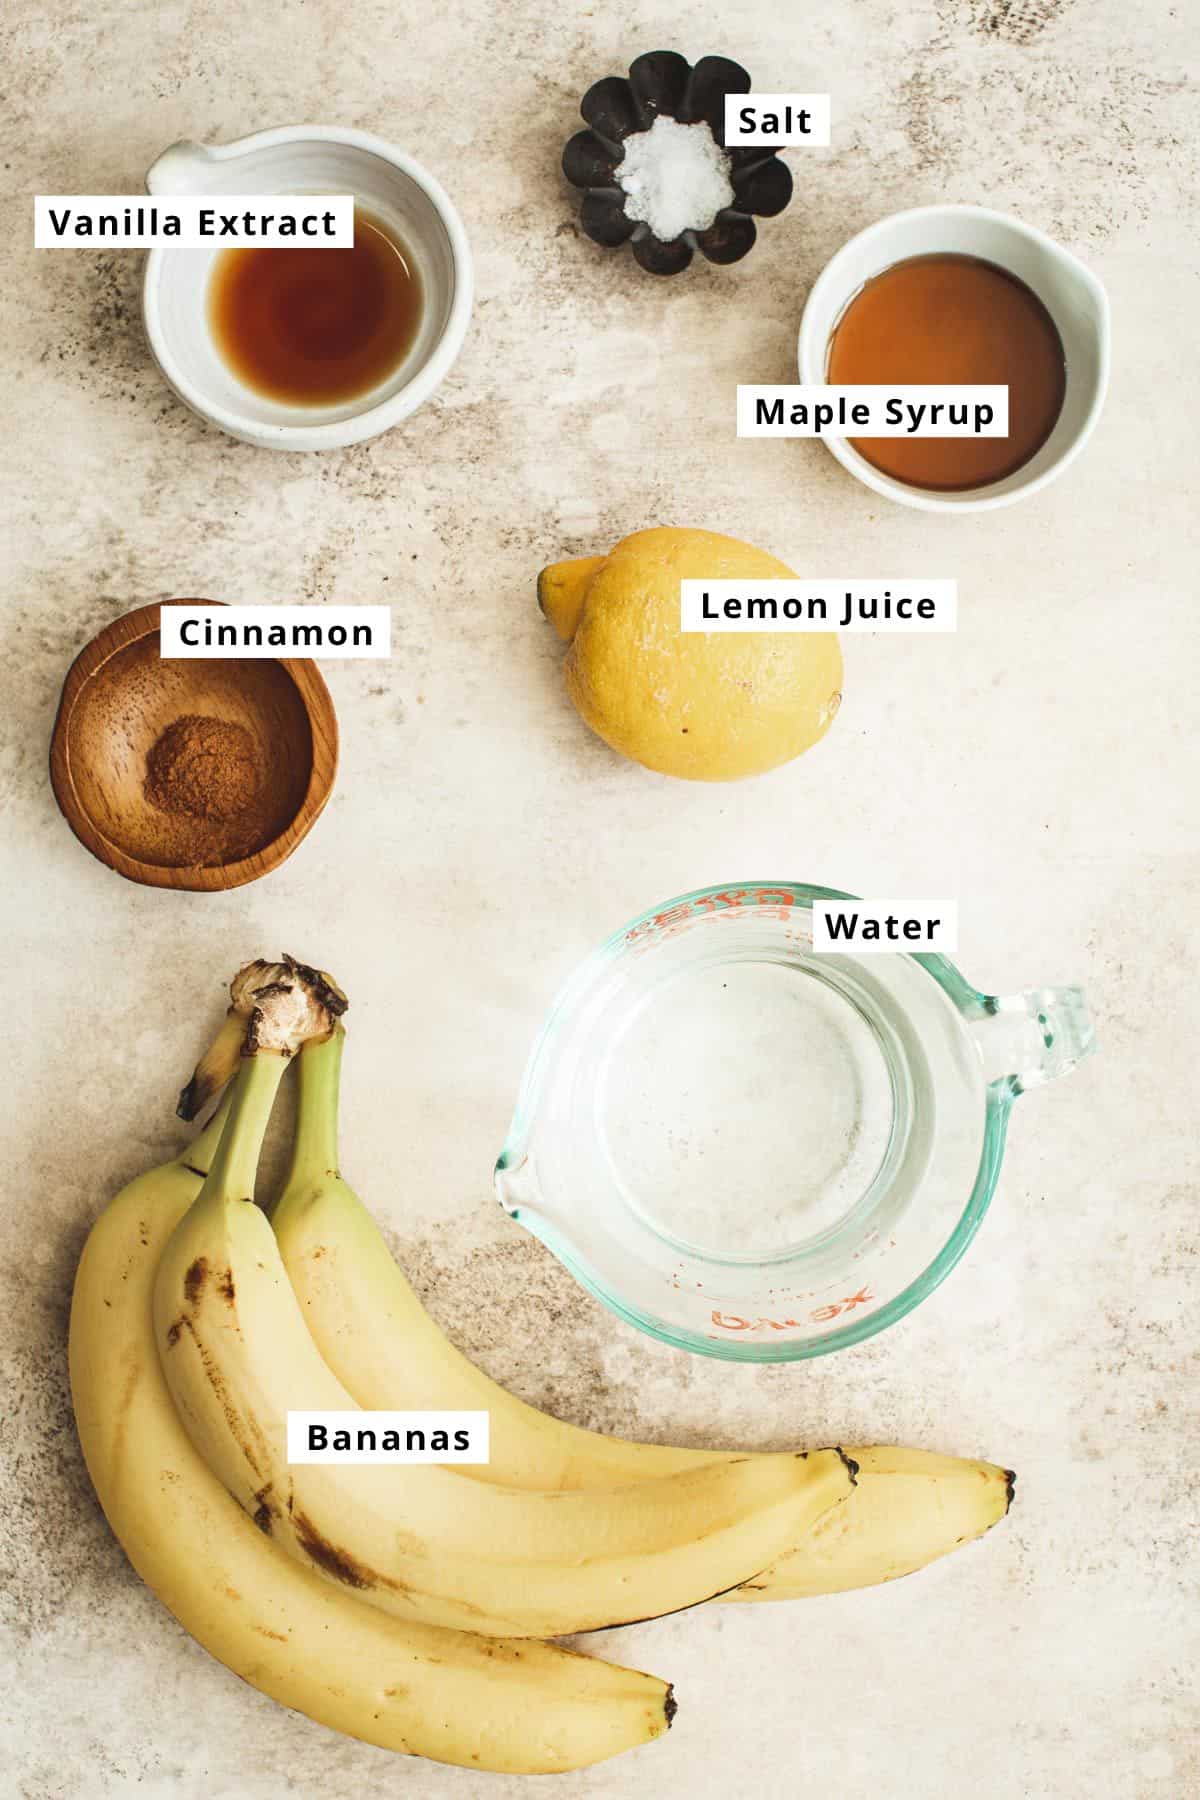 Banana milk ingredients in various bowls.